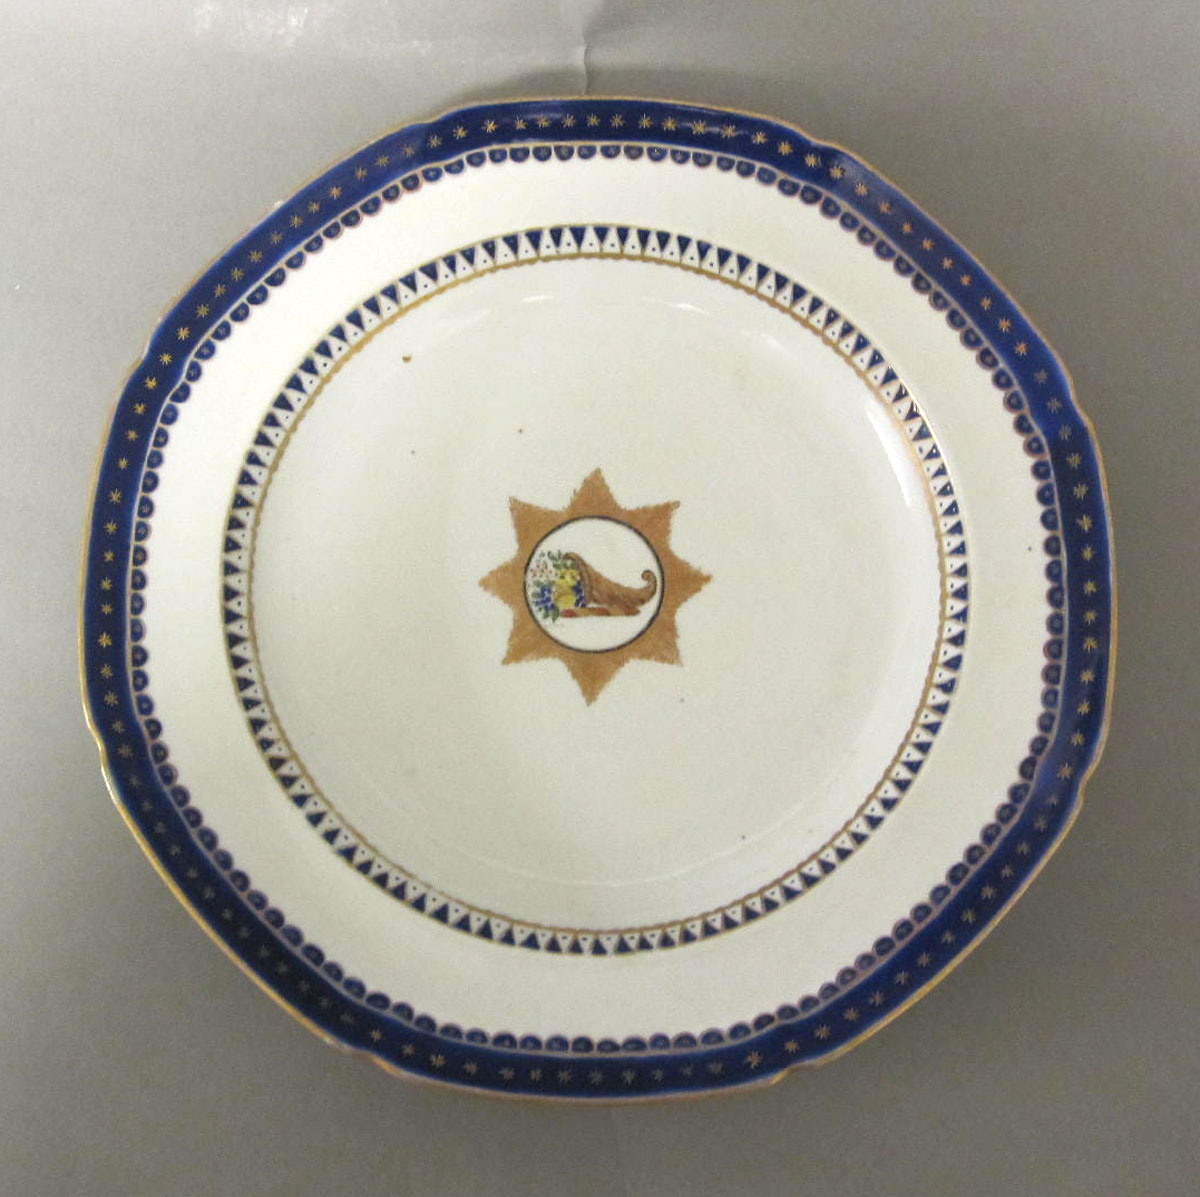 1965.0718.007 Porcelain plate